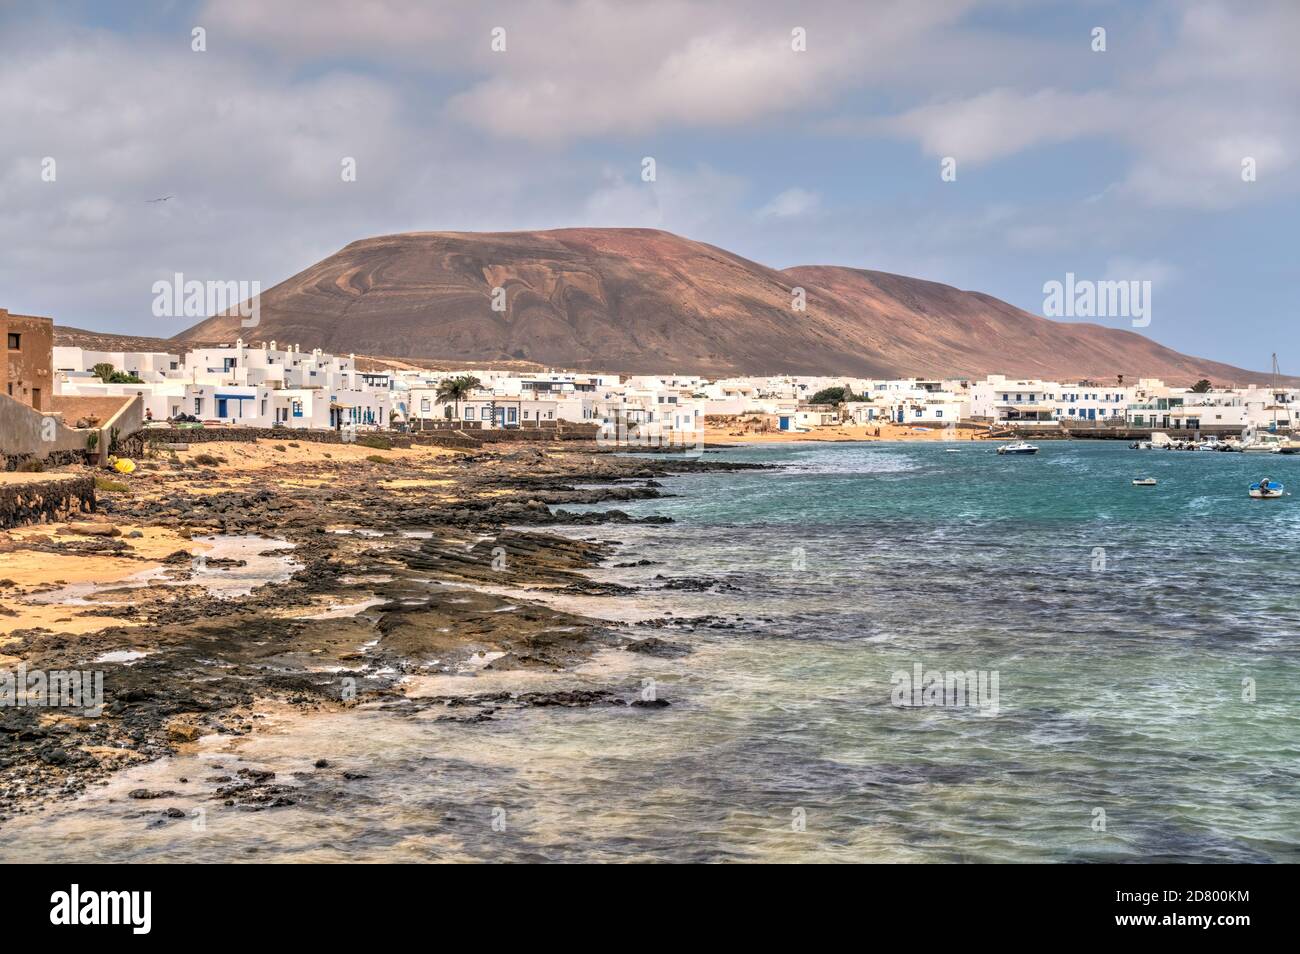 La Graciosa Island, Canary Islands, HDR Image Stock Photo